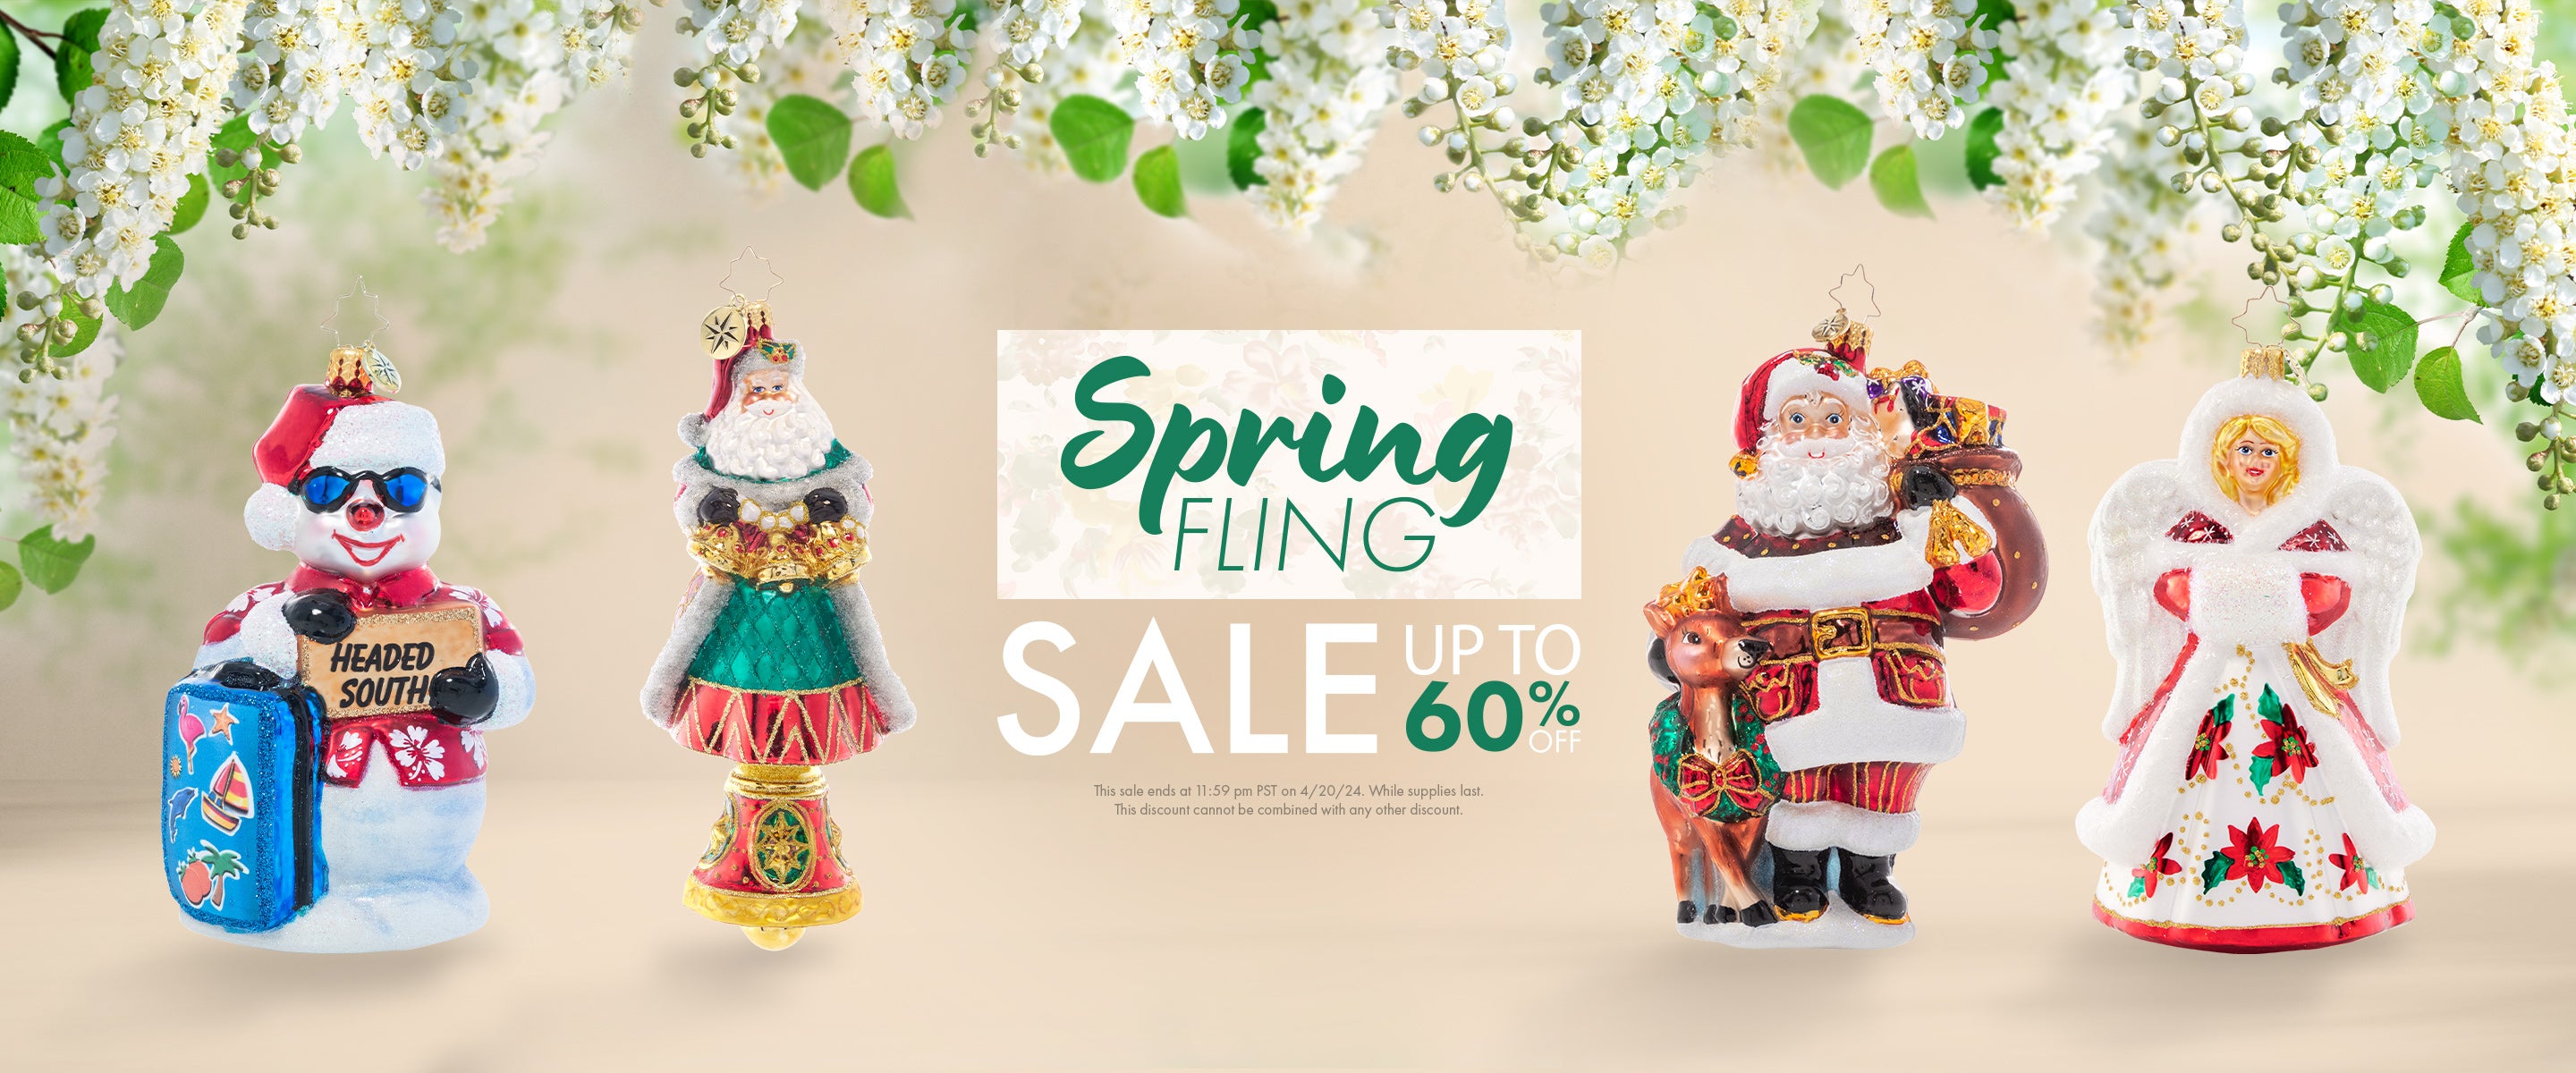 Up to 60% Off Spring Fling Sale